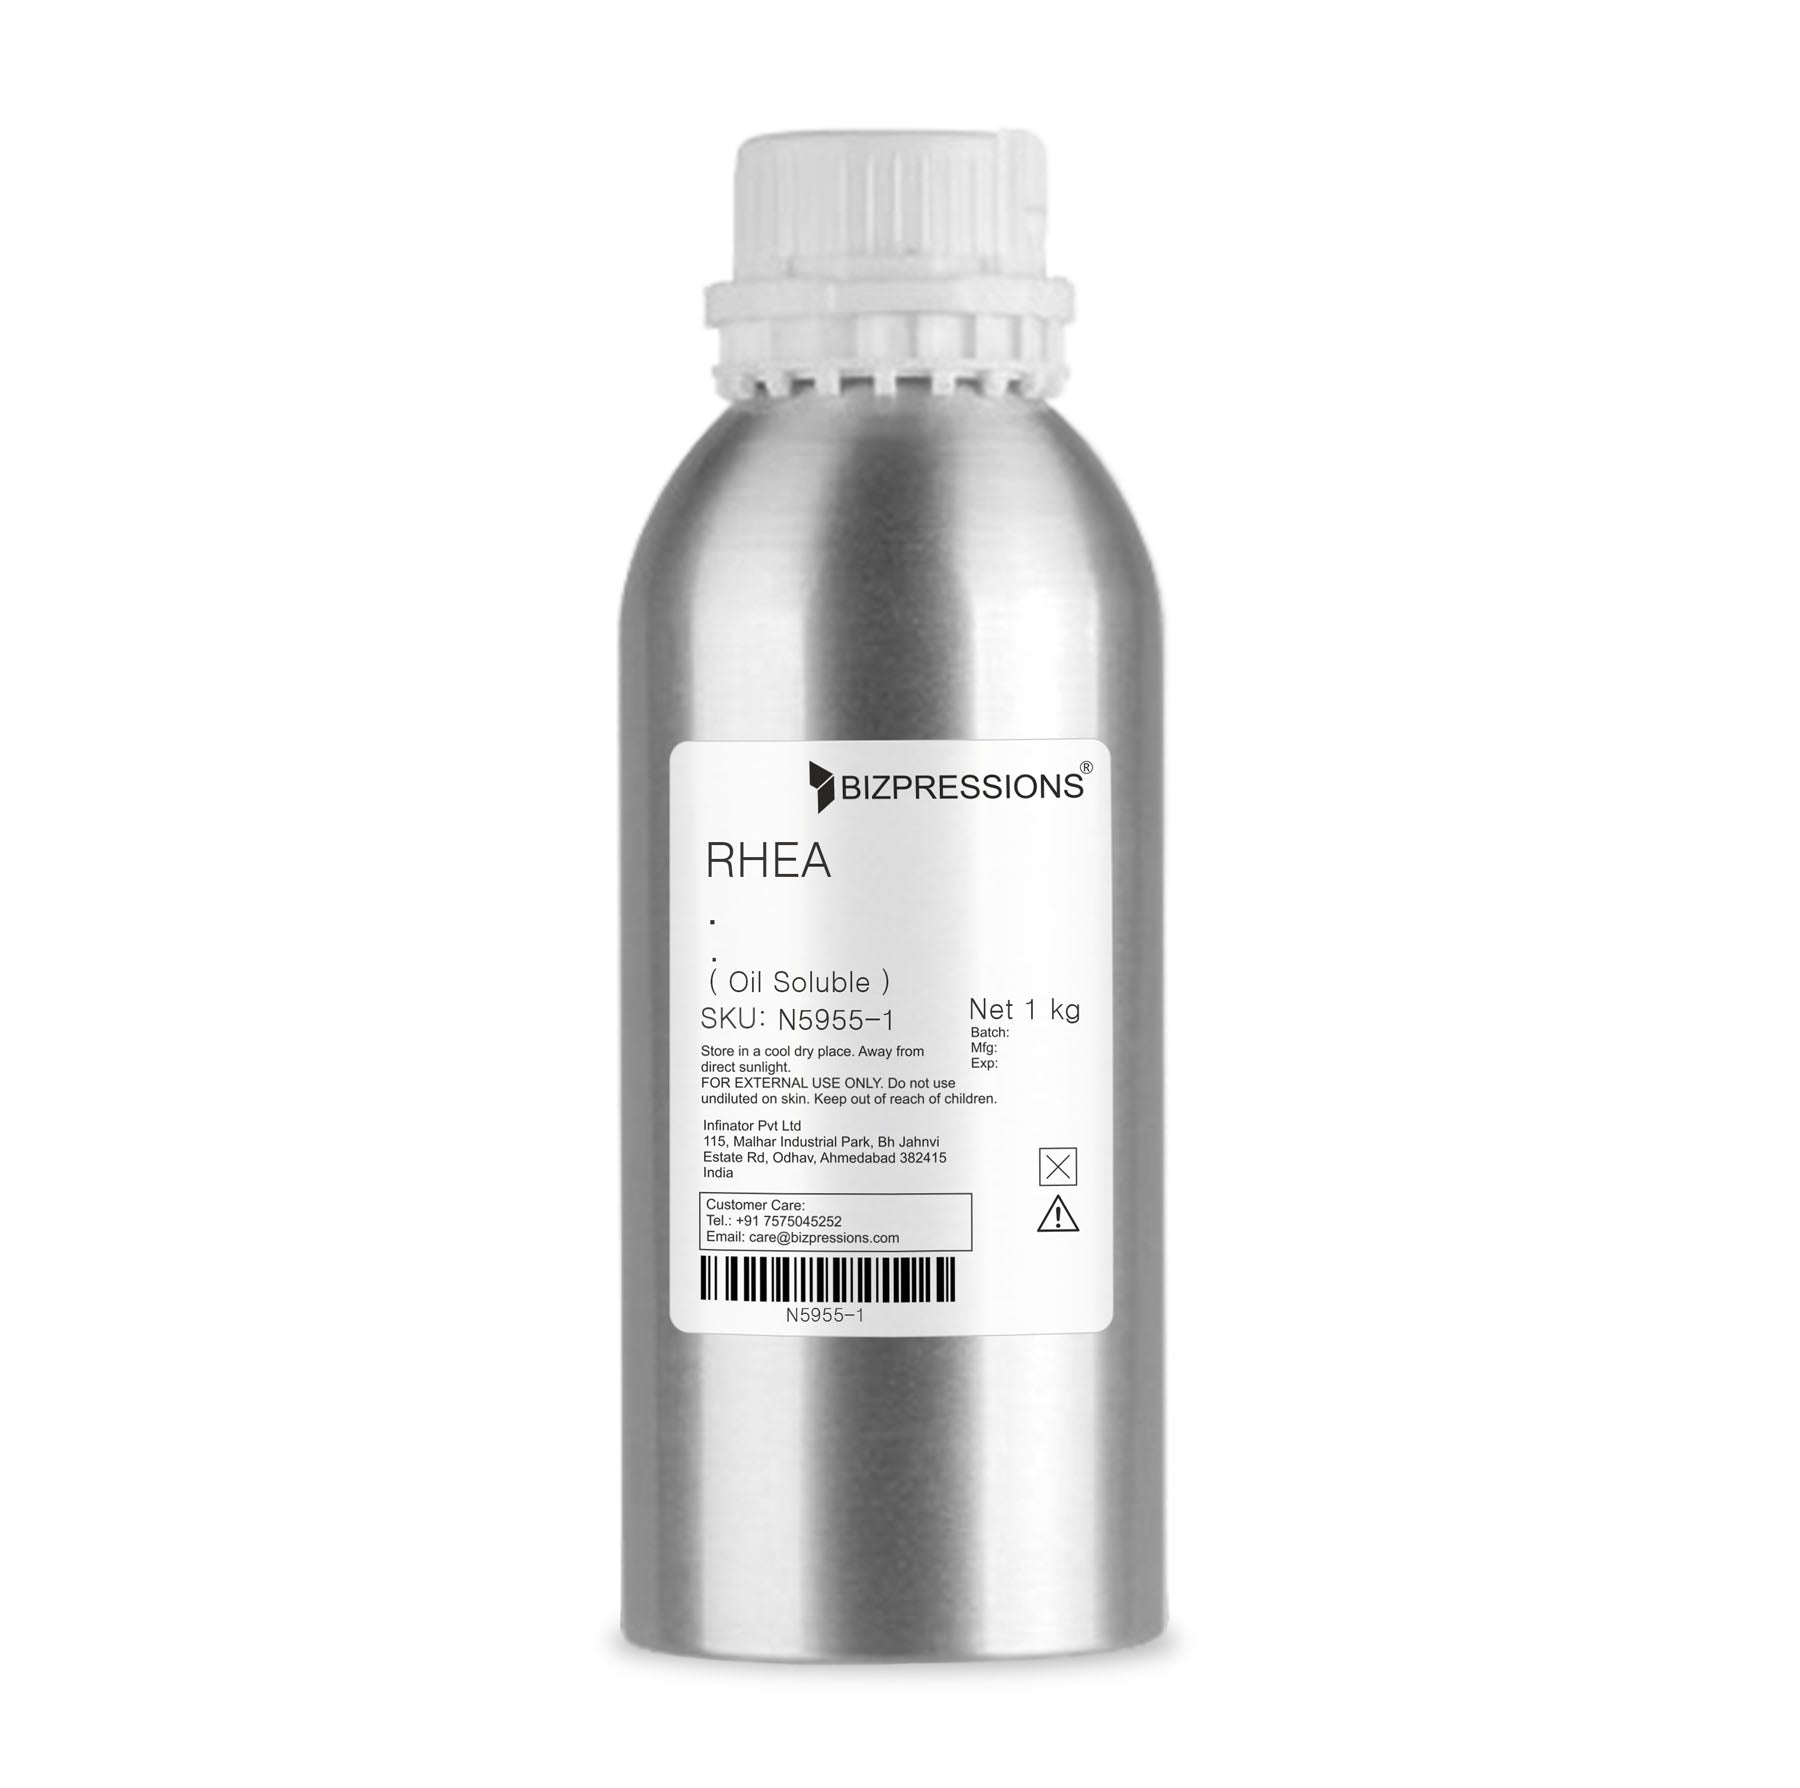 RHEA - Fragrance ( Oil Soluble ) - 1 kg